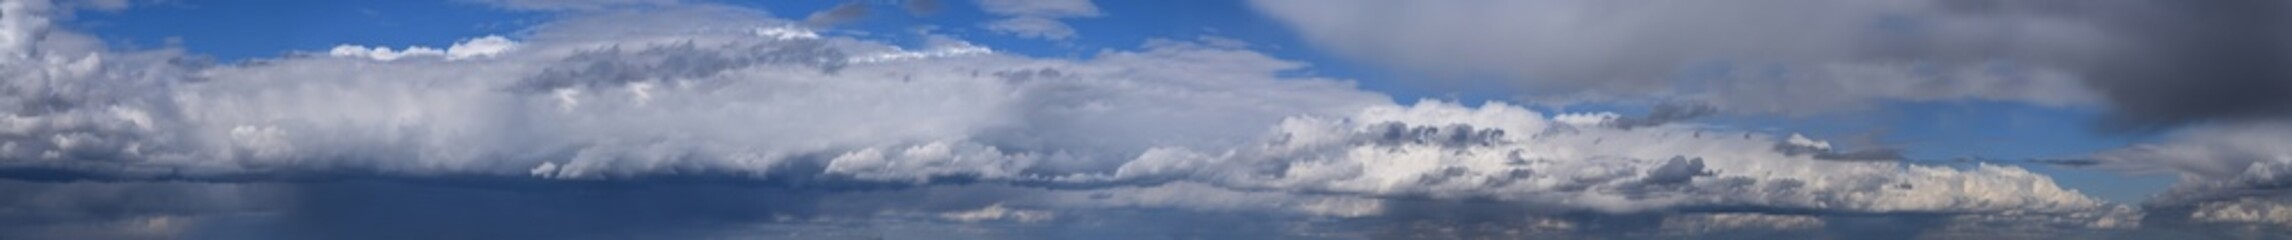 Noon, summer cumulus clouds before rain.
Panoramic, horizontal, photographic image of the sky, water vapor, atmospheric phenomenon. - 471602845